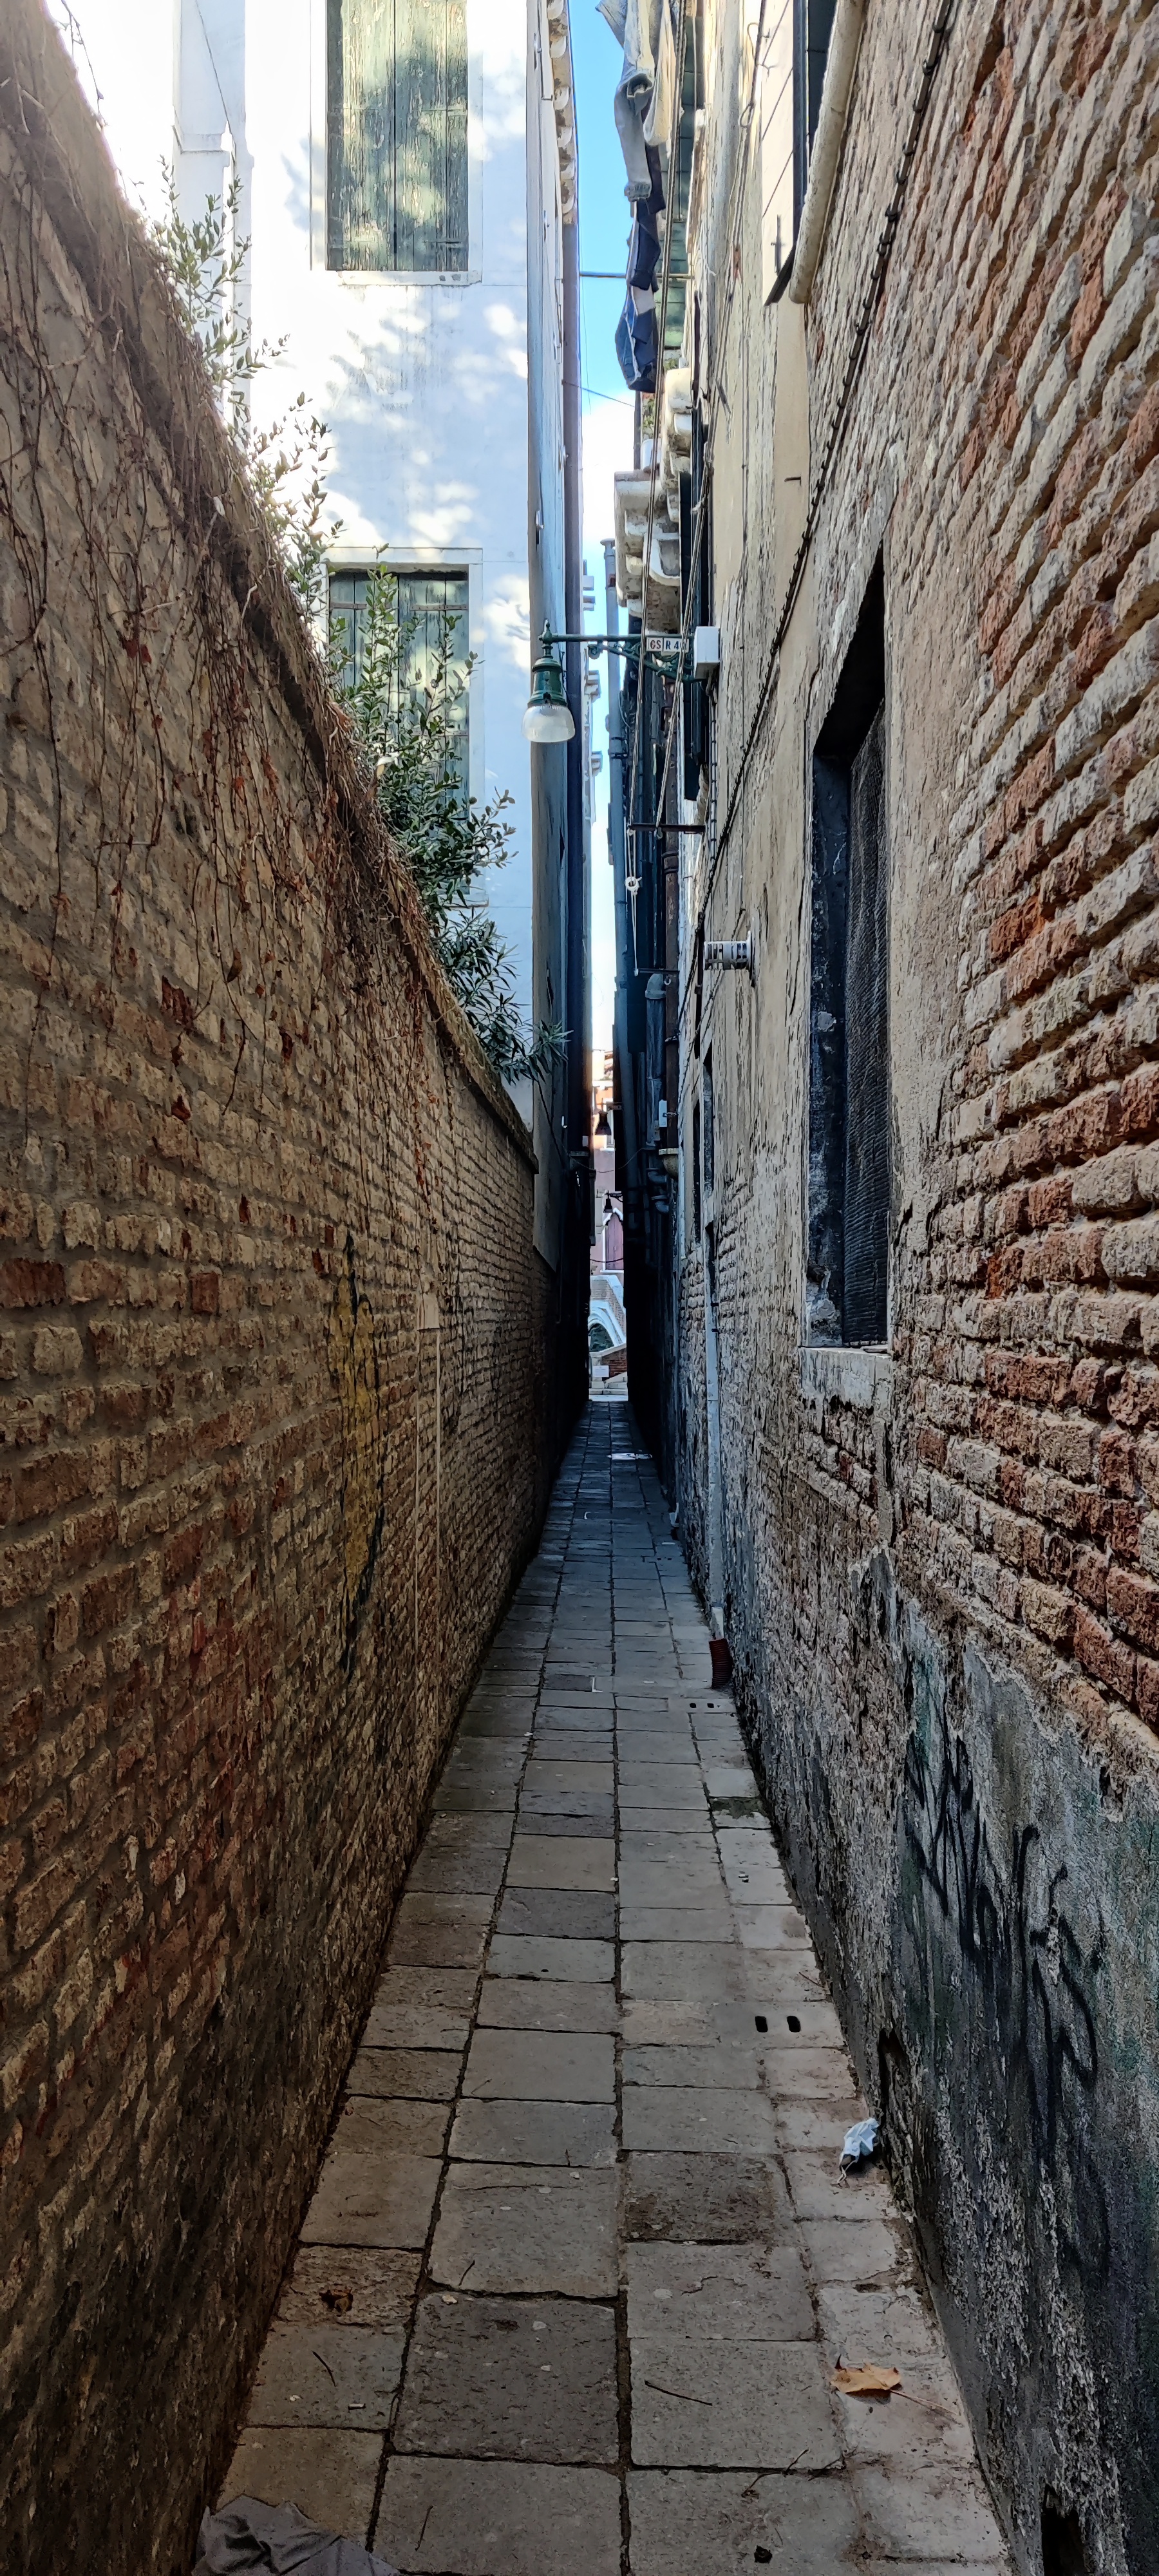 Calle estrecha de Venecia - Venecia en 3 días